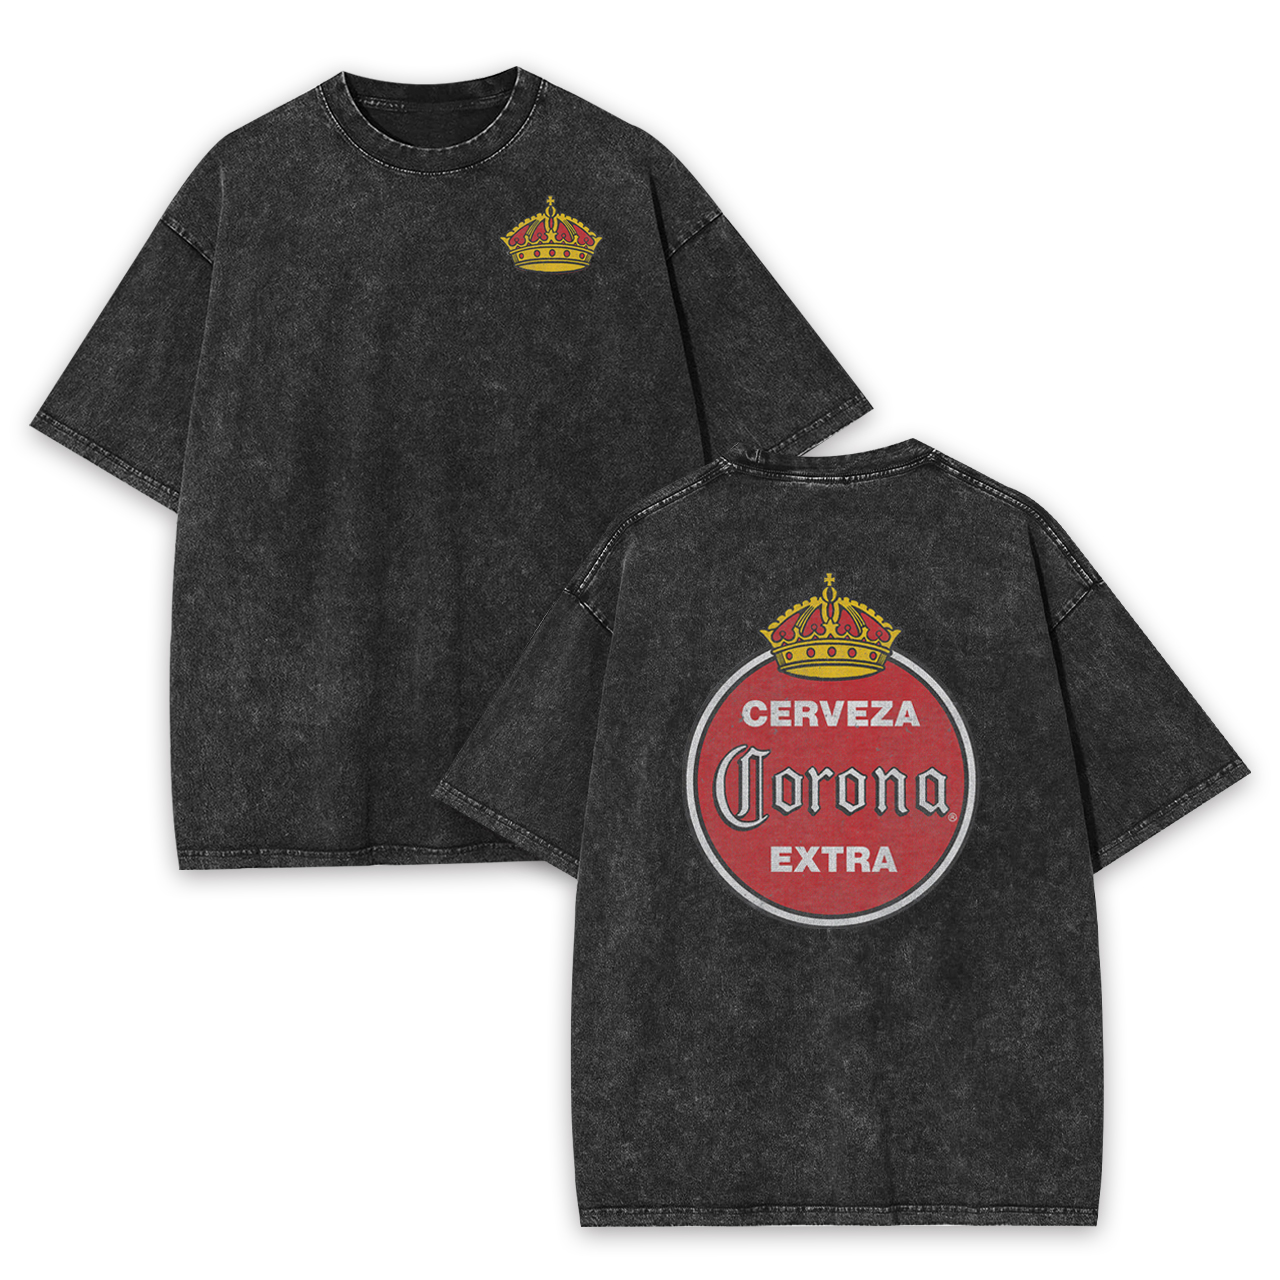 
Cerveza Corona Extra  Garment-dye Tees